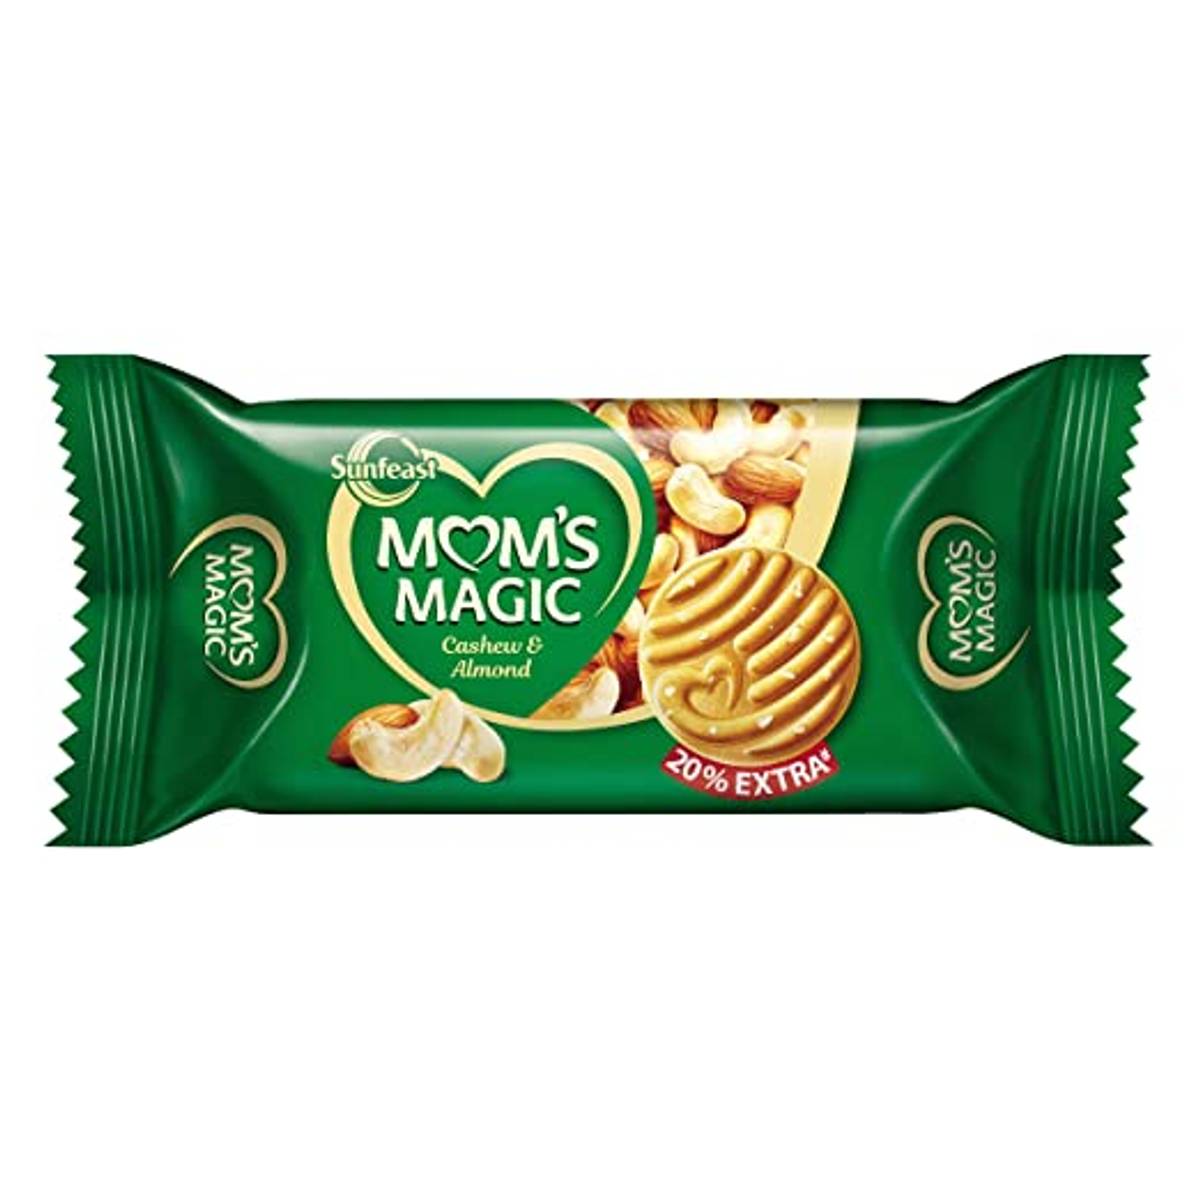 Sunfeast Moms Magic Cashew & Almond Biscuit  120G